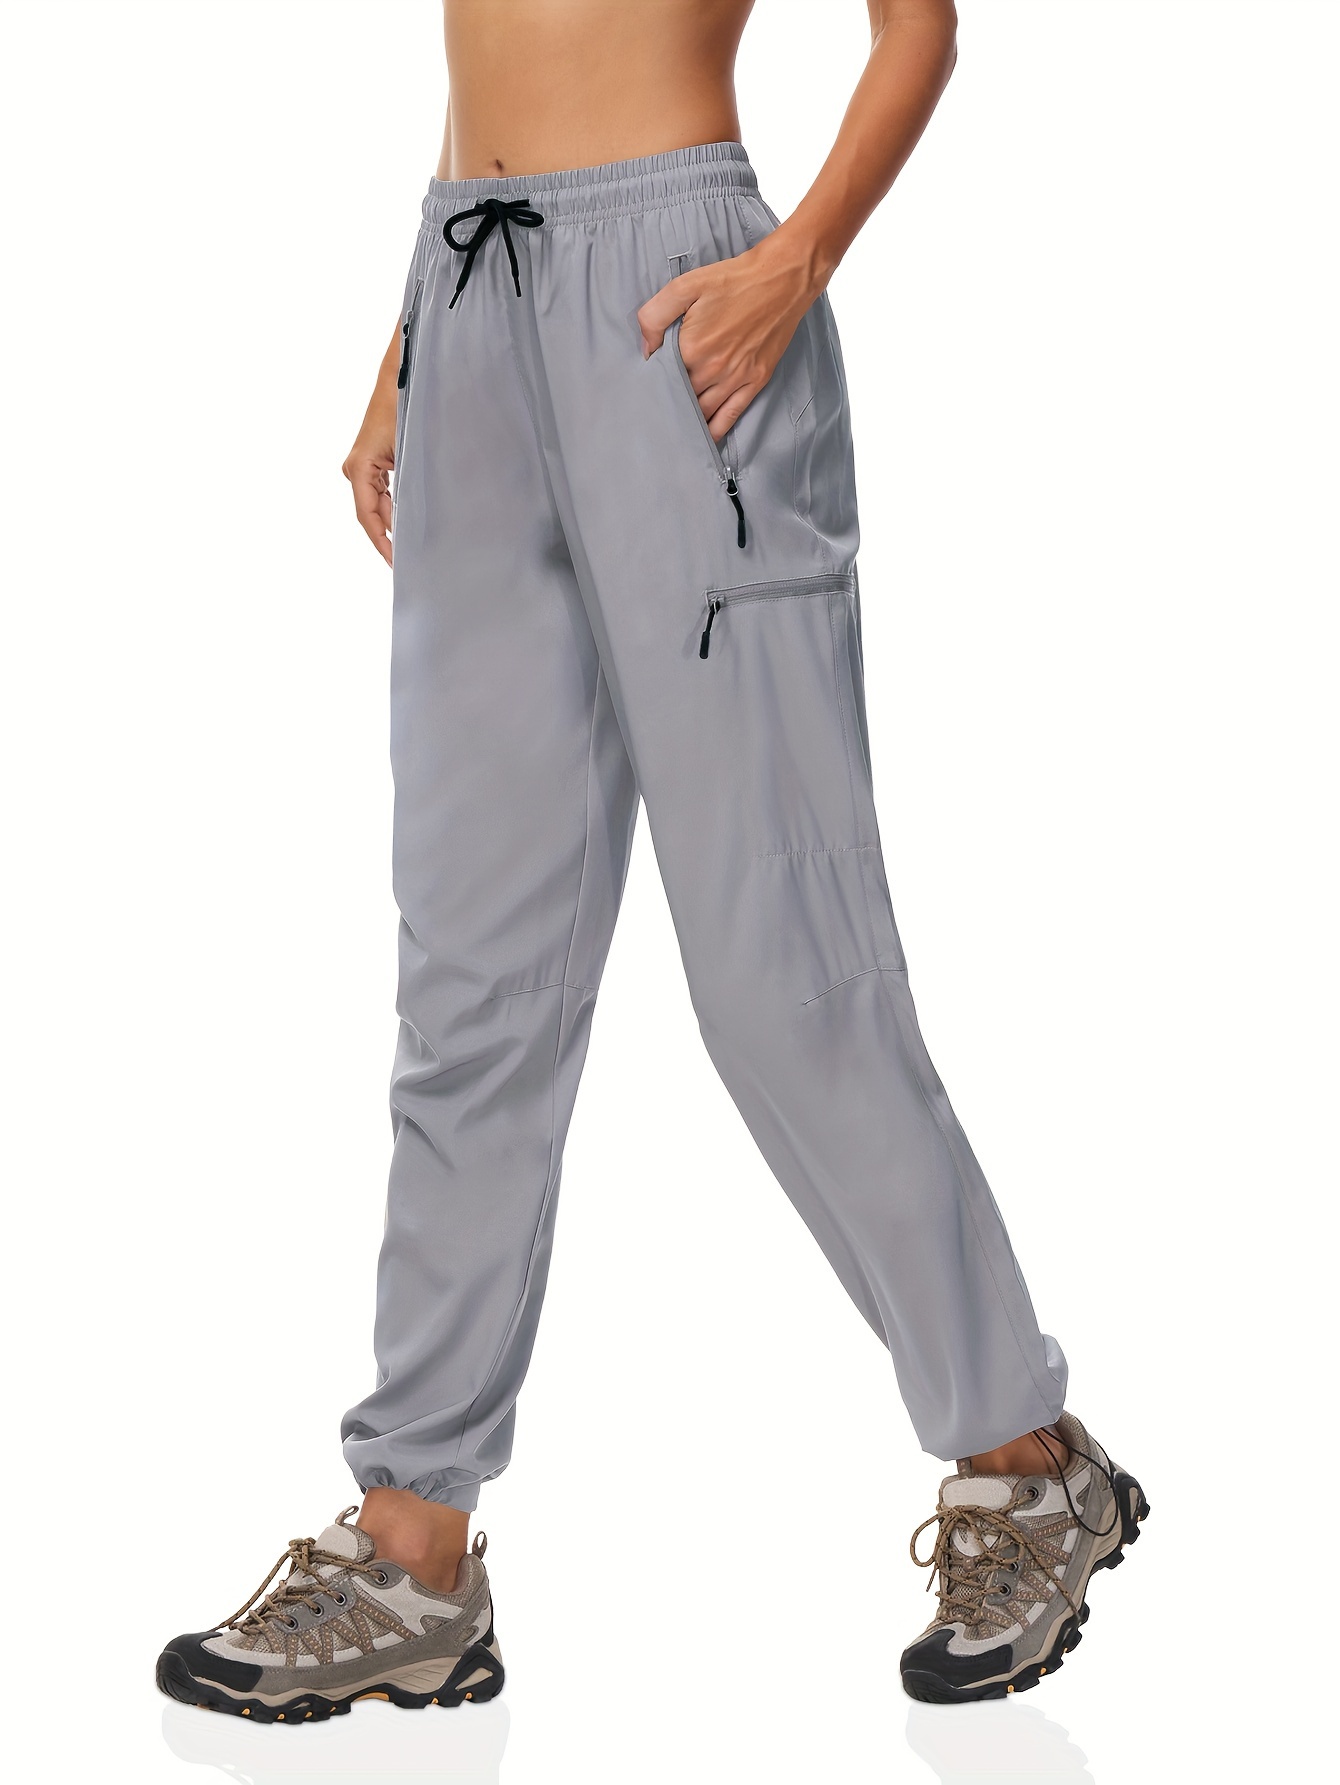 Gopune Women's Outdoor Hiking Pants Lightweight Quick Dry Water Resistant  Mountain Trouser